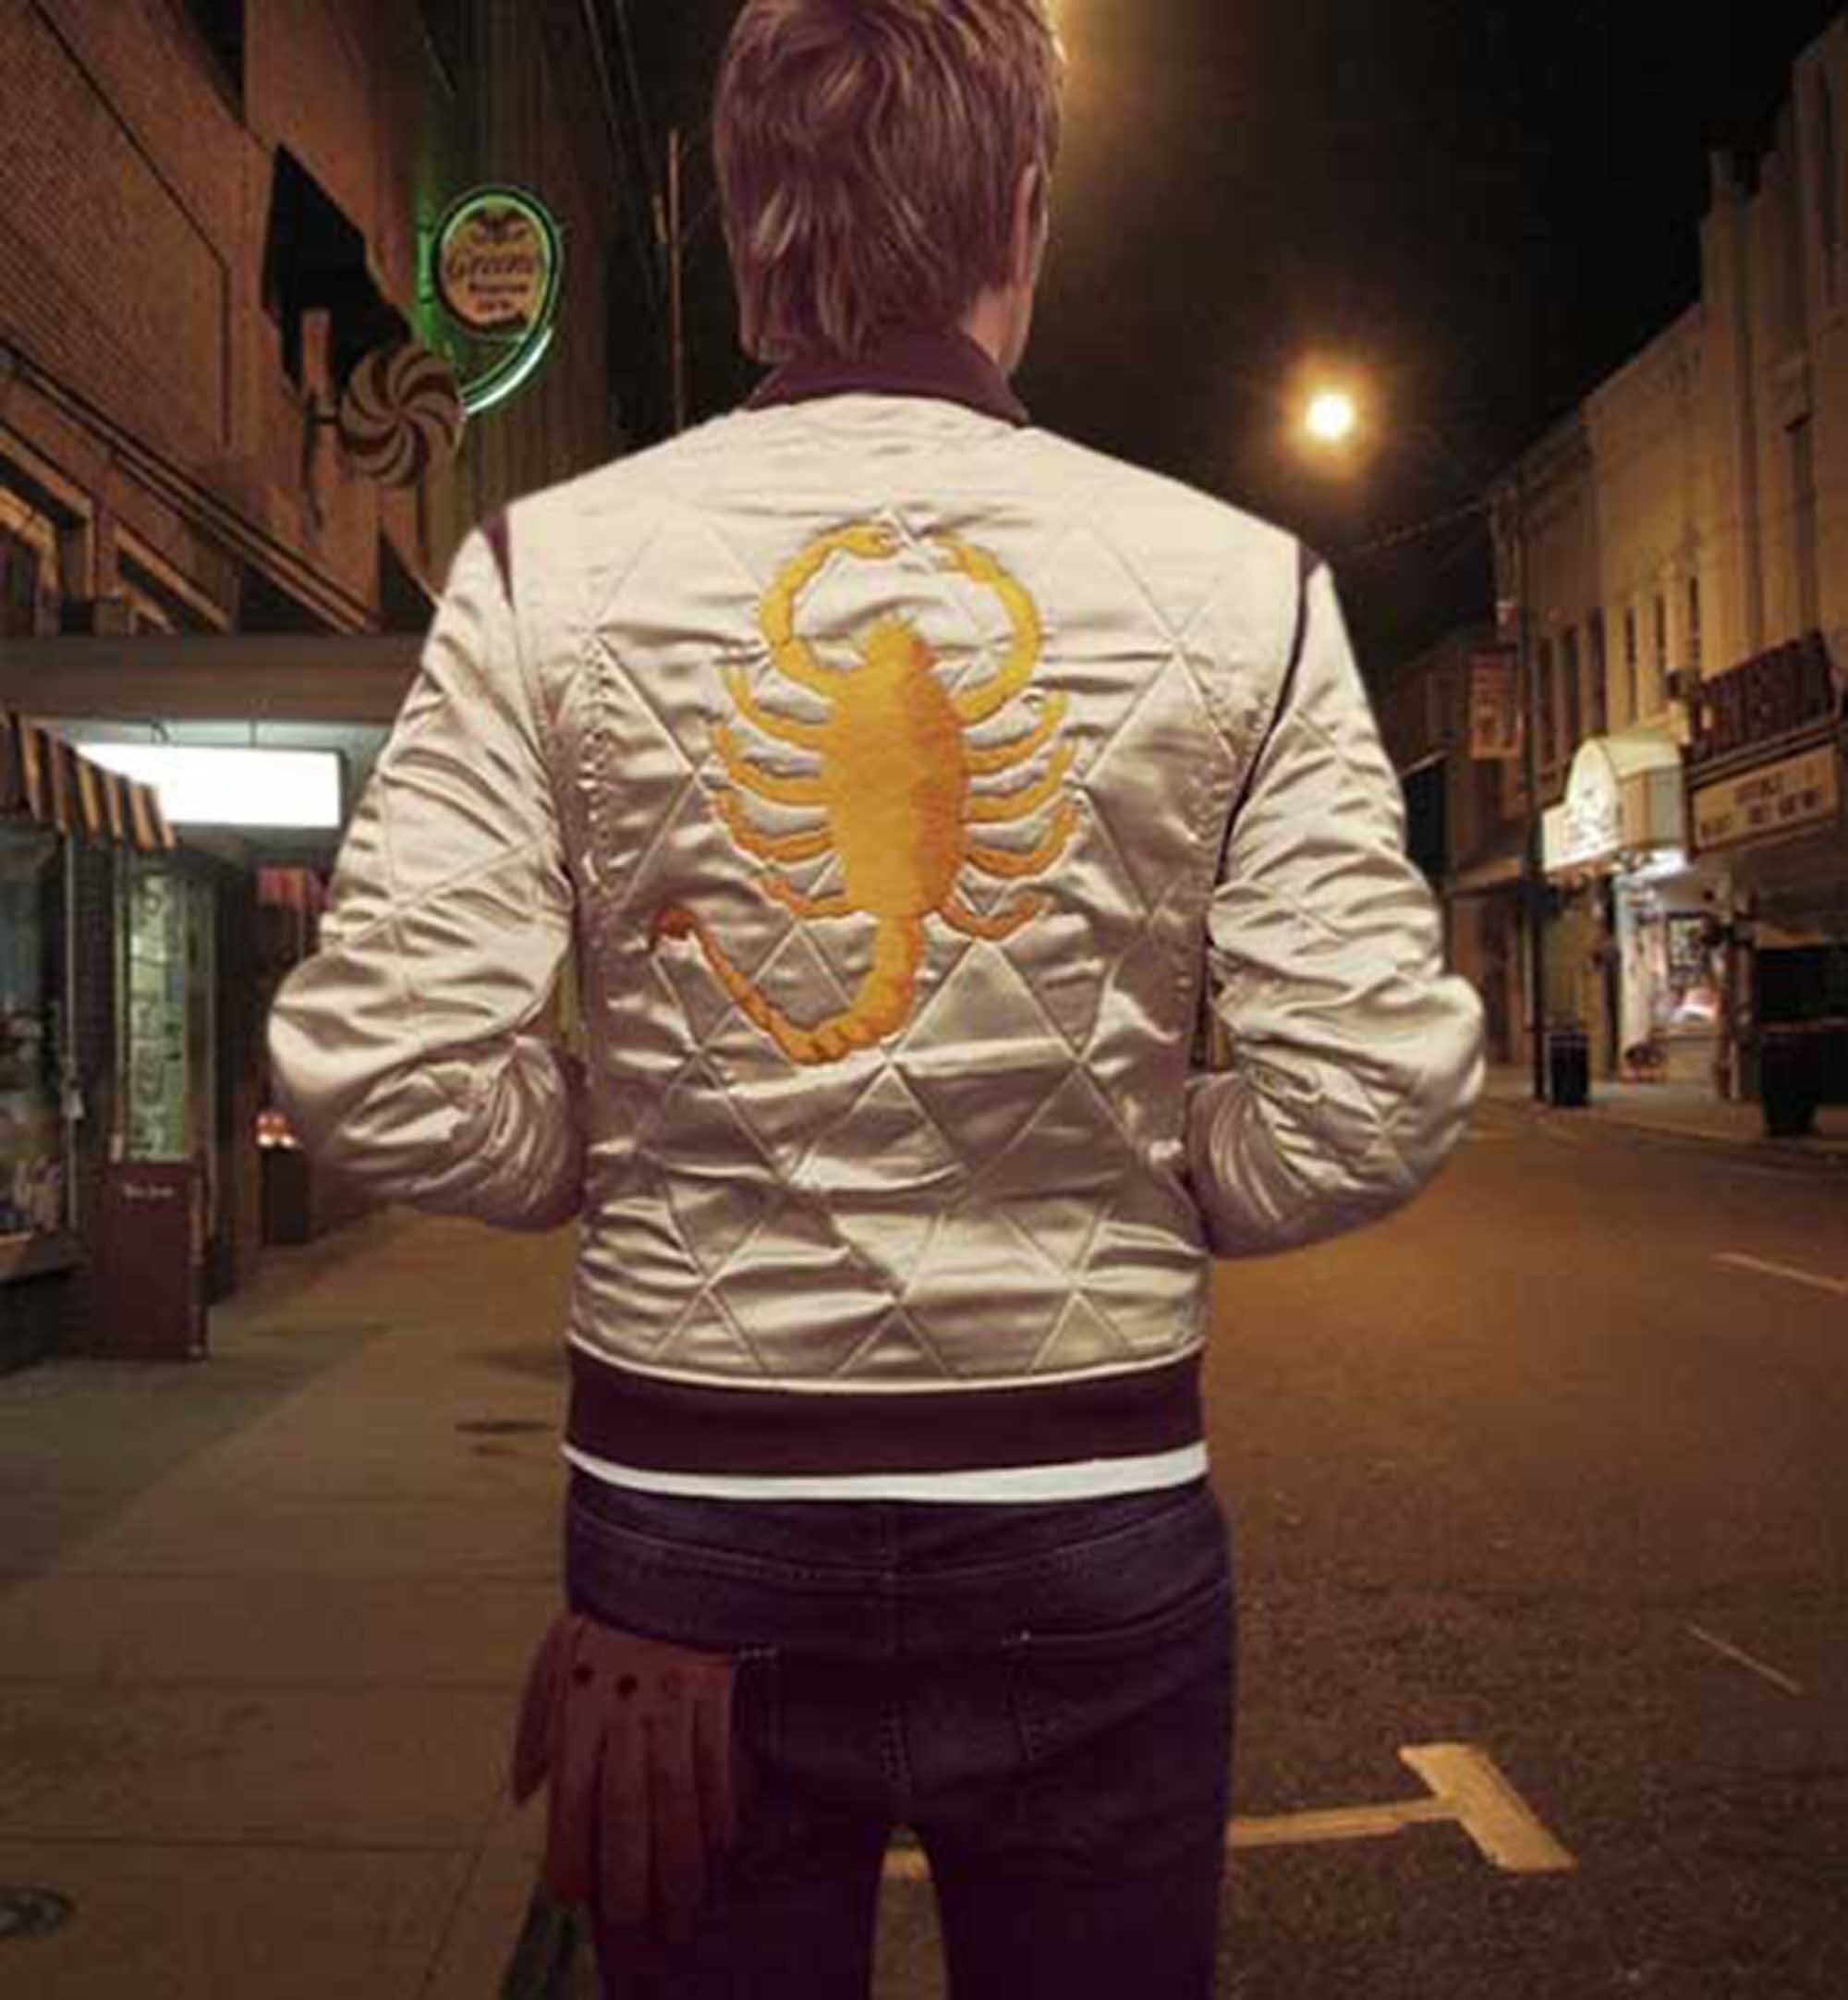 Driver - Ryan Gosling T-Shirt by Inspirowl Design - Pixels